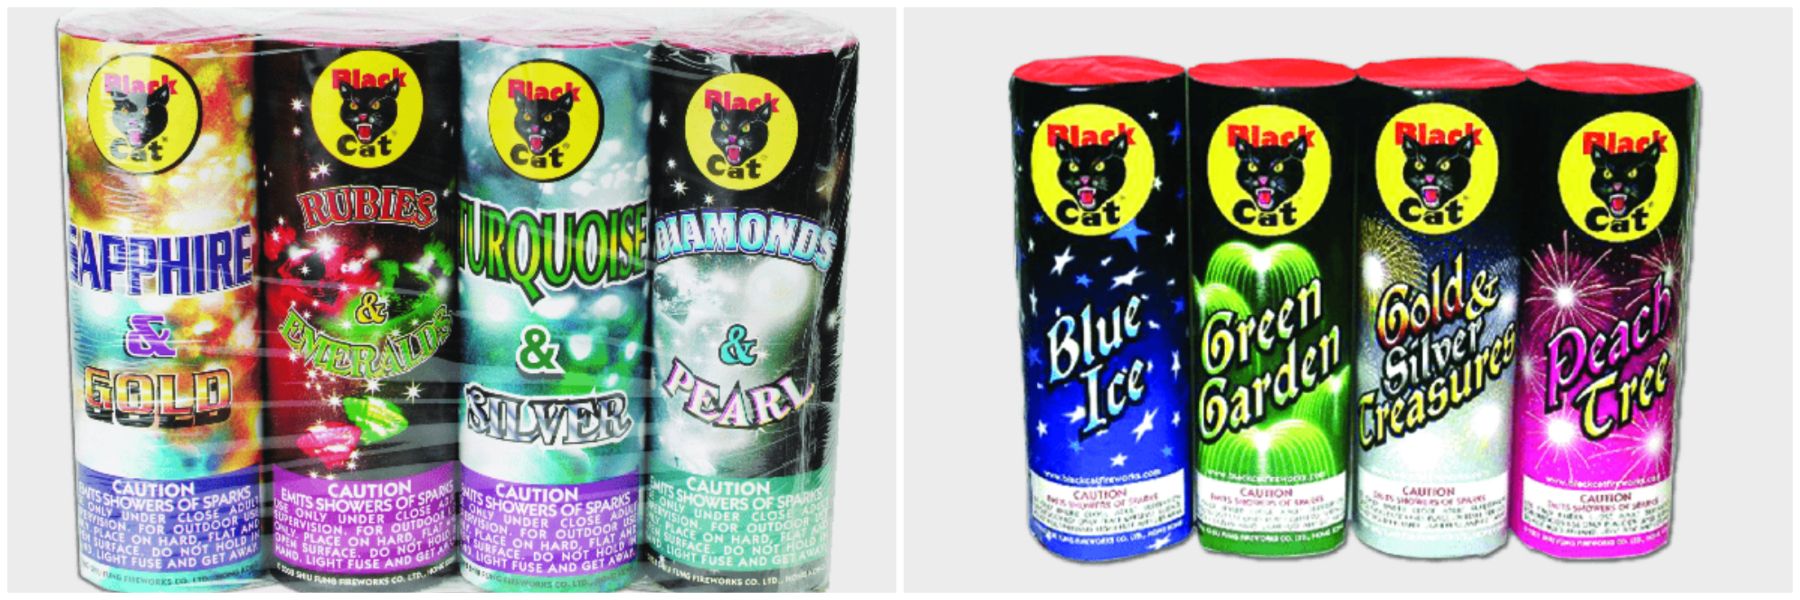 official black cat product bundles fireworks 